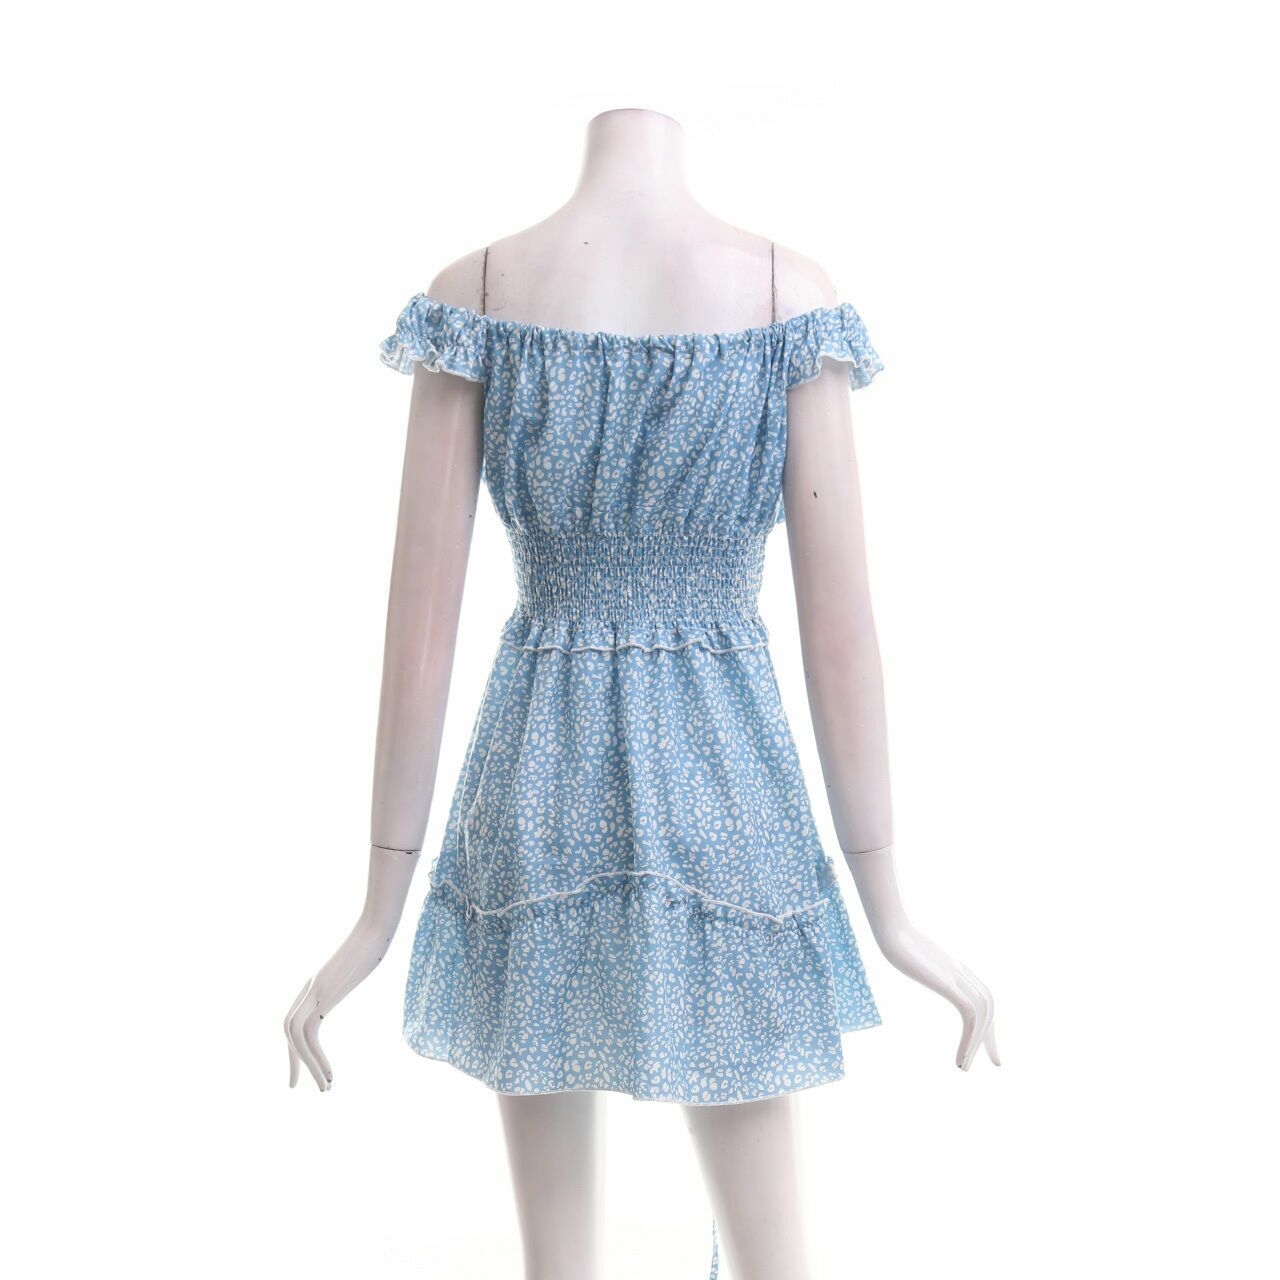 Zaful Blue Patterned Mini Dress